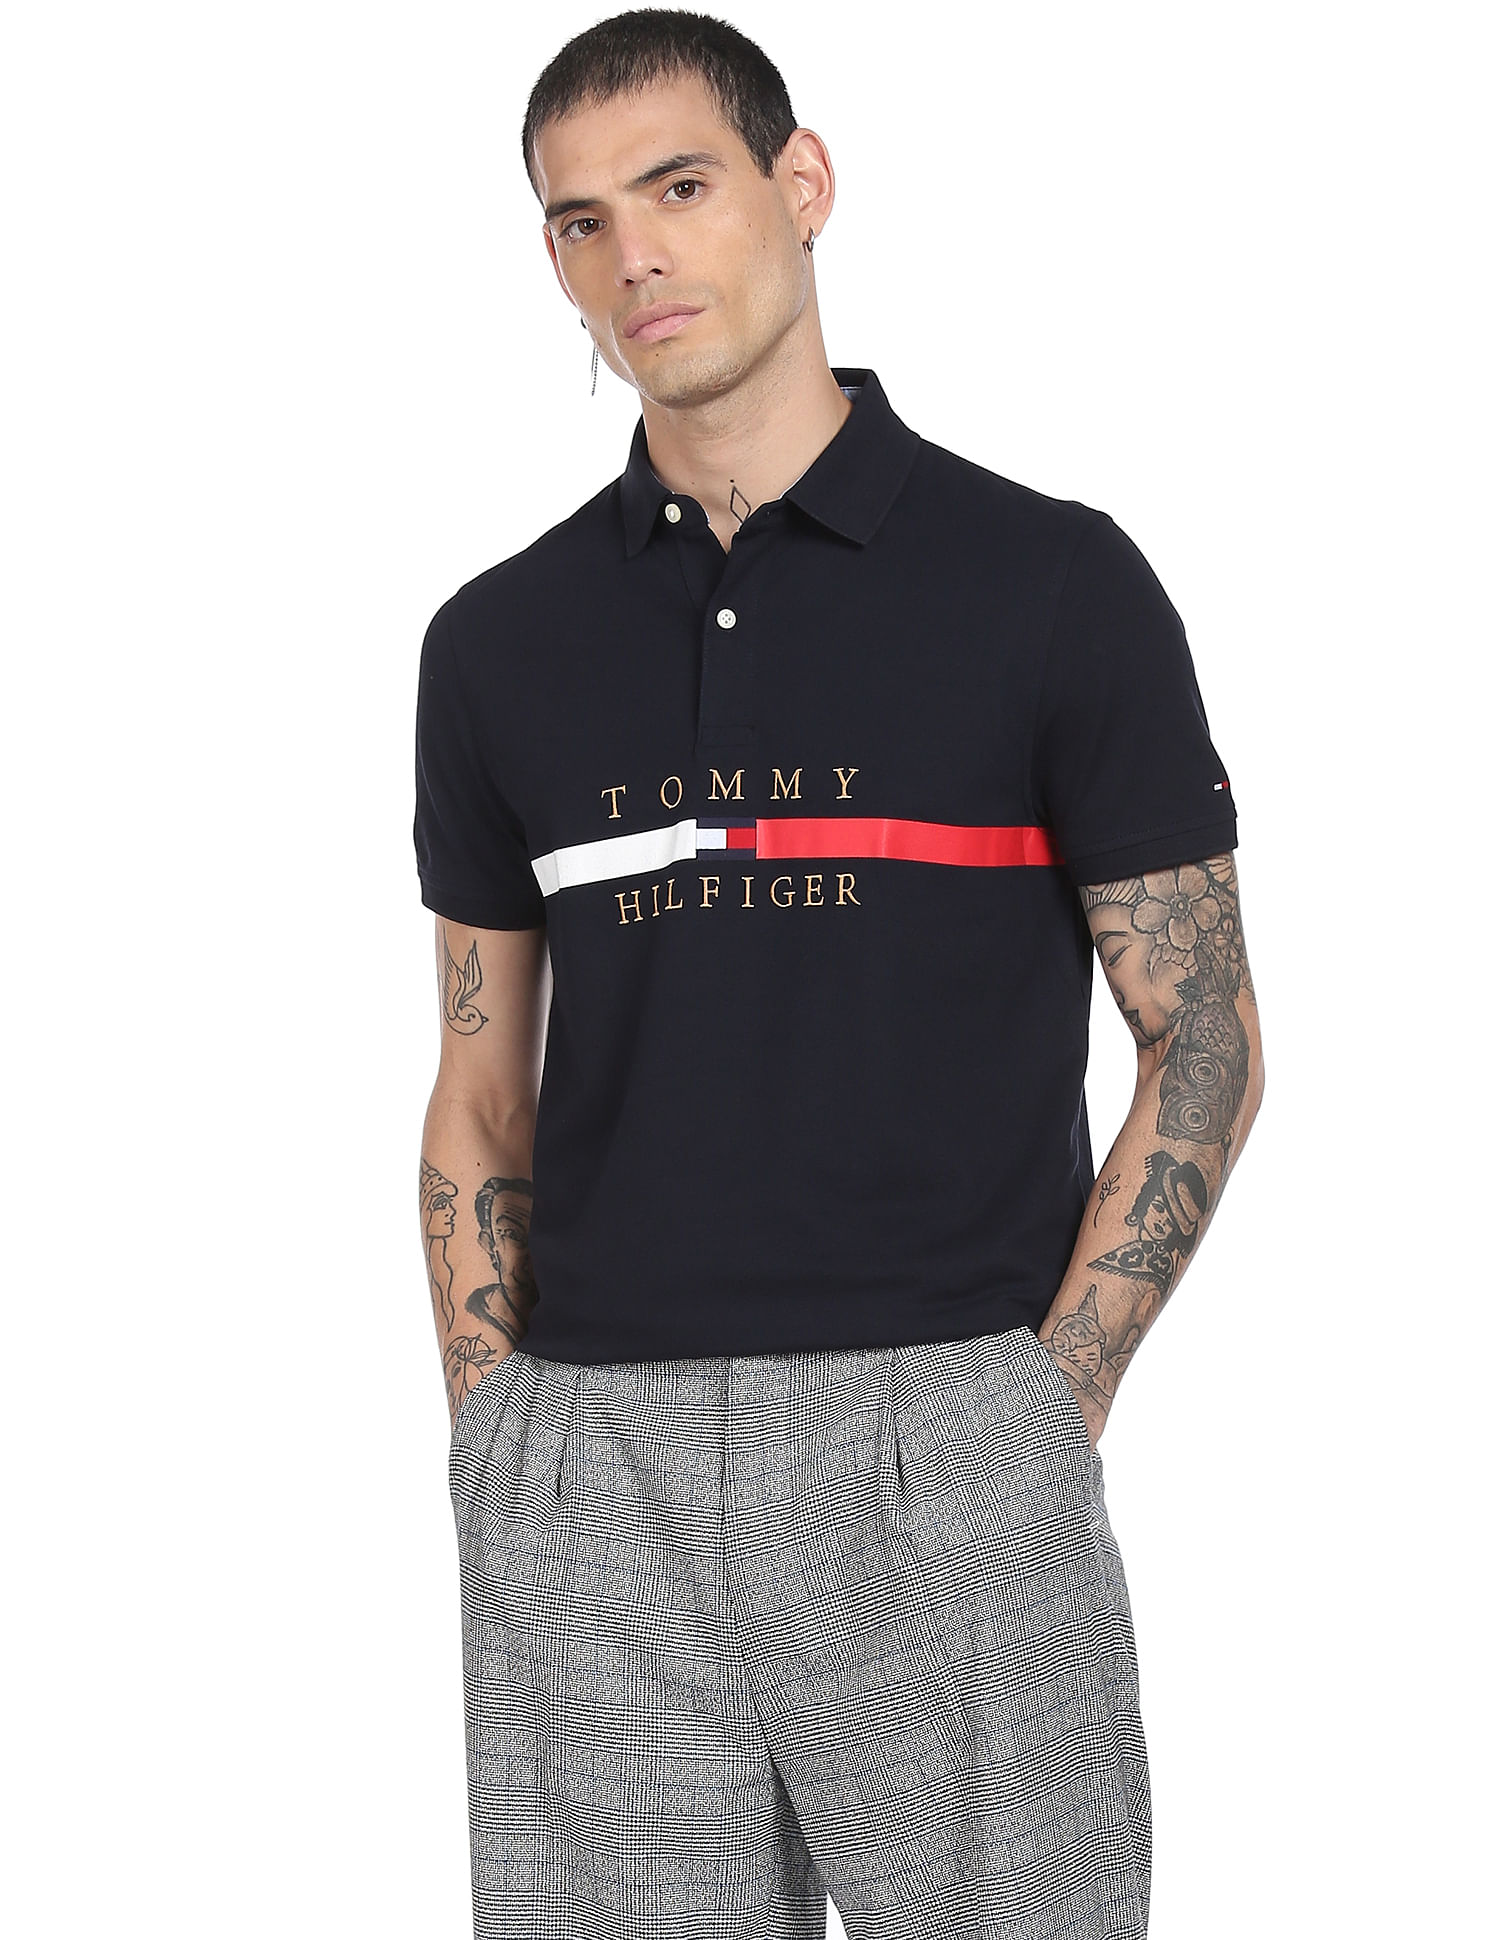 Logo Pique Clinton Embroidered Hilfiger Buy Men Shirt Polo Tommy Navy